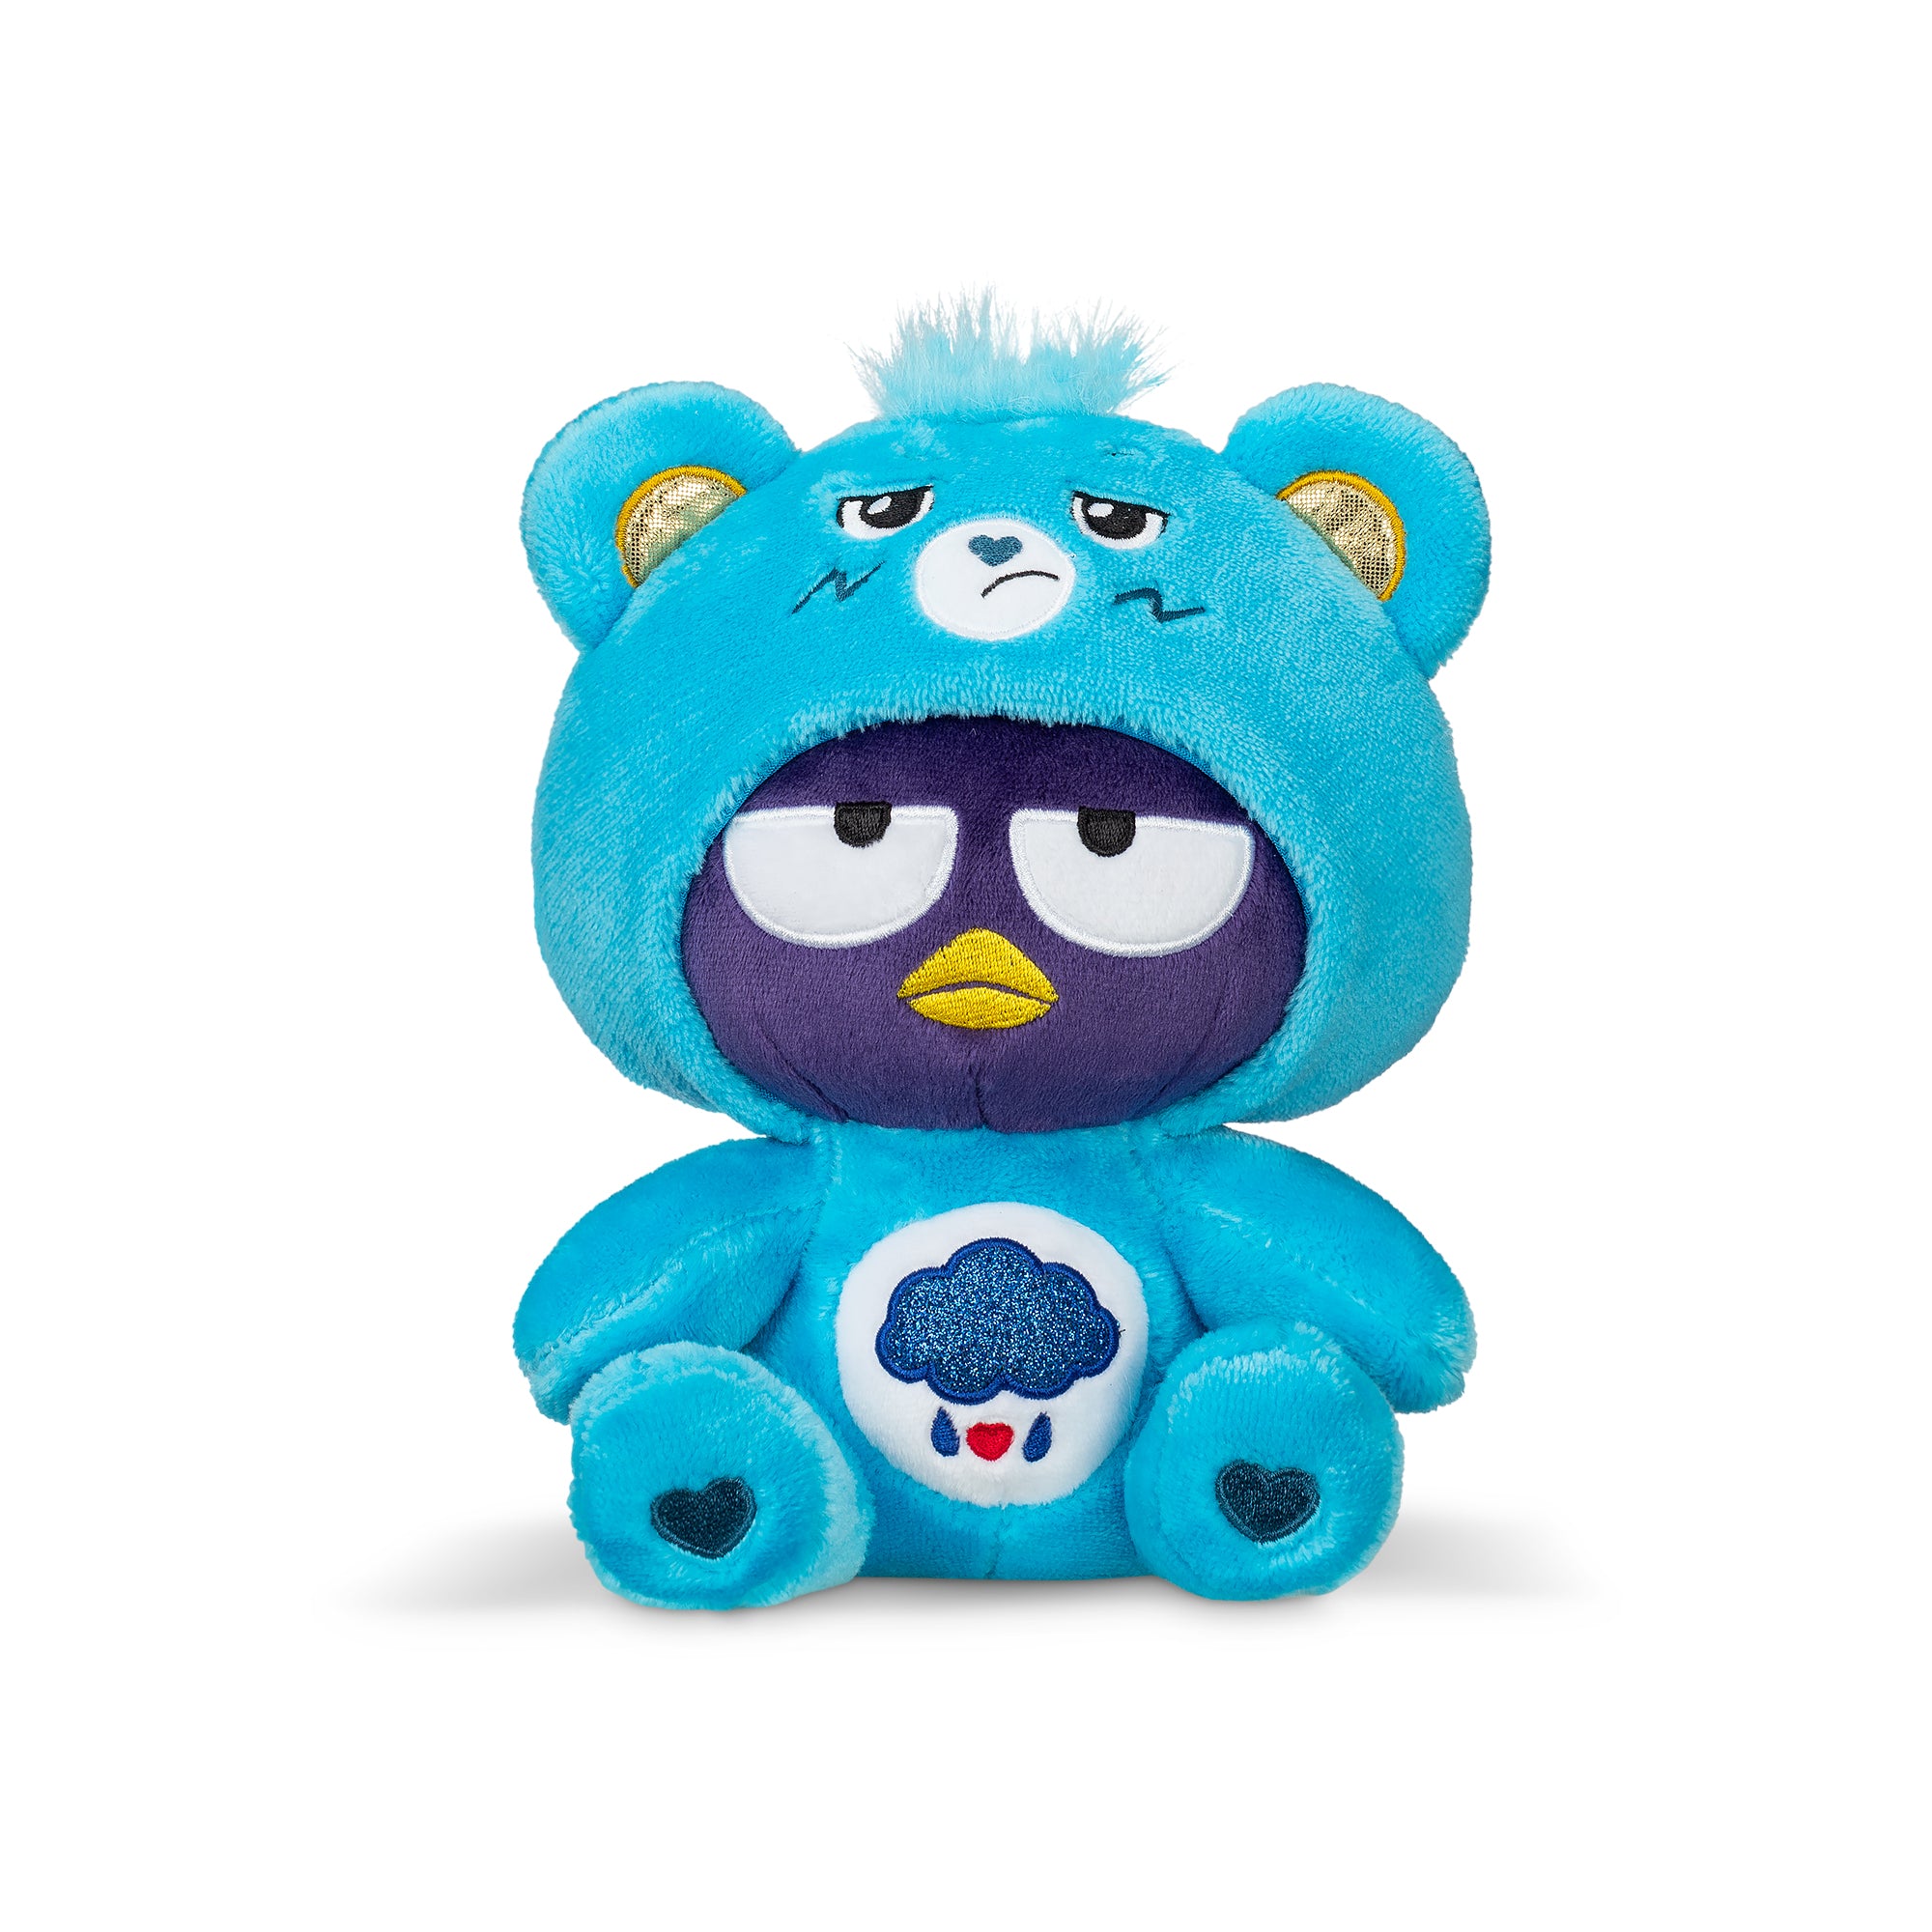 Badtz-maru x Care Bears 8" Plush (Grumpy Bear) Plush Basic Fun Inc   